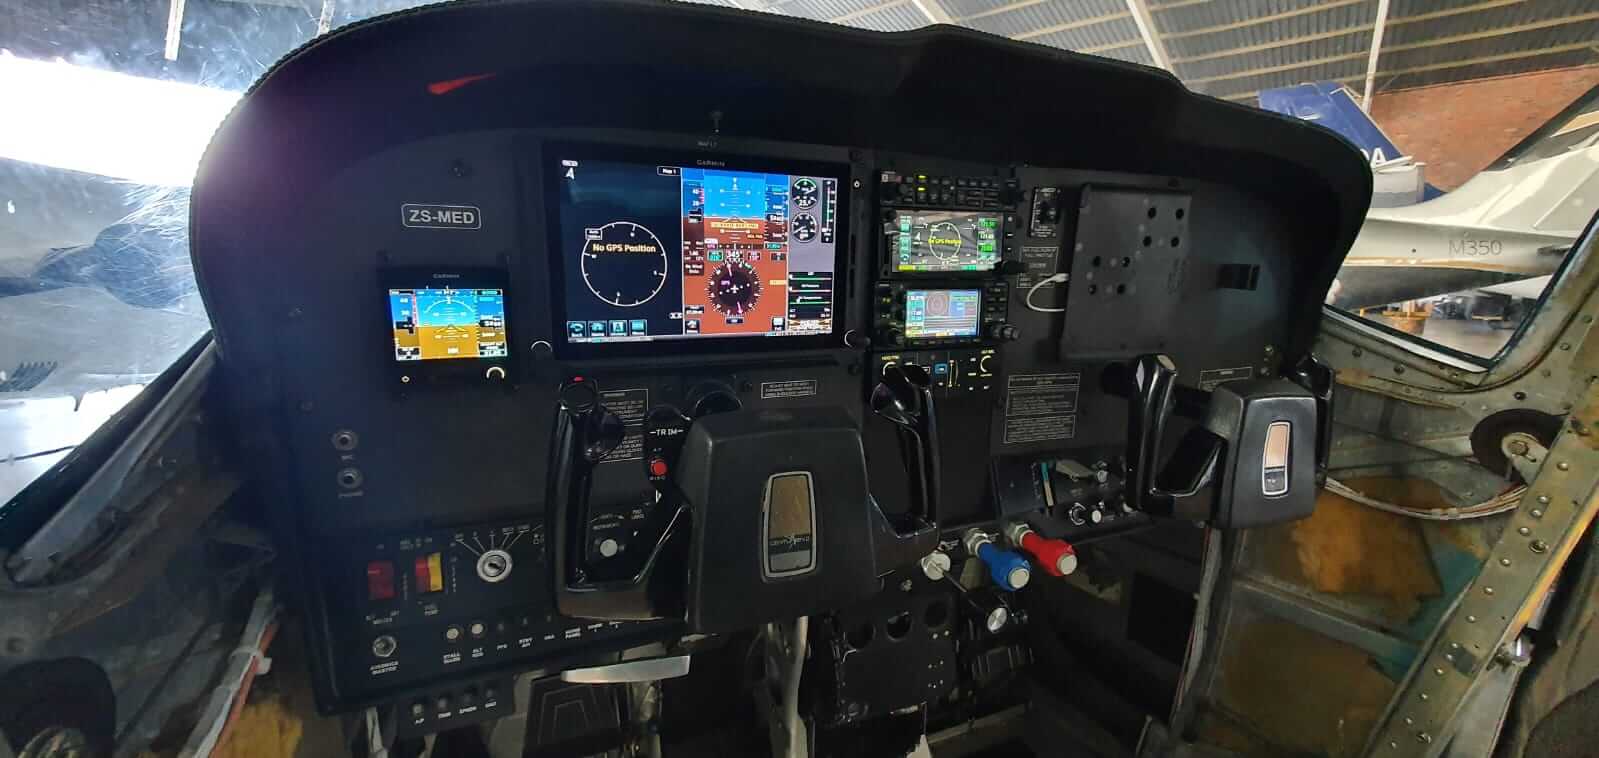 Install Garmin G500TXi, Engine indication, GTN650Xi, GFC500 Autopilot, Artex 406Mhz ELT, G5 Standby Attitude and iPad mount to Cessna 210.